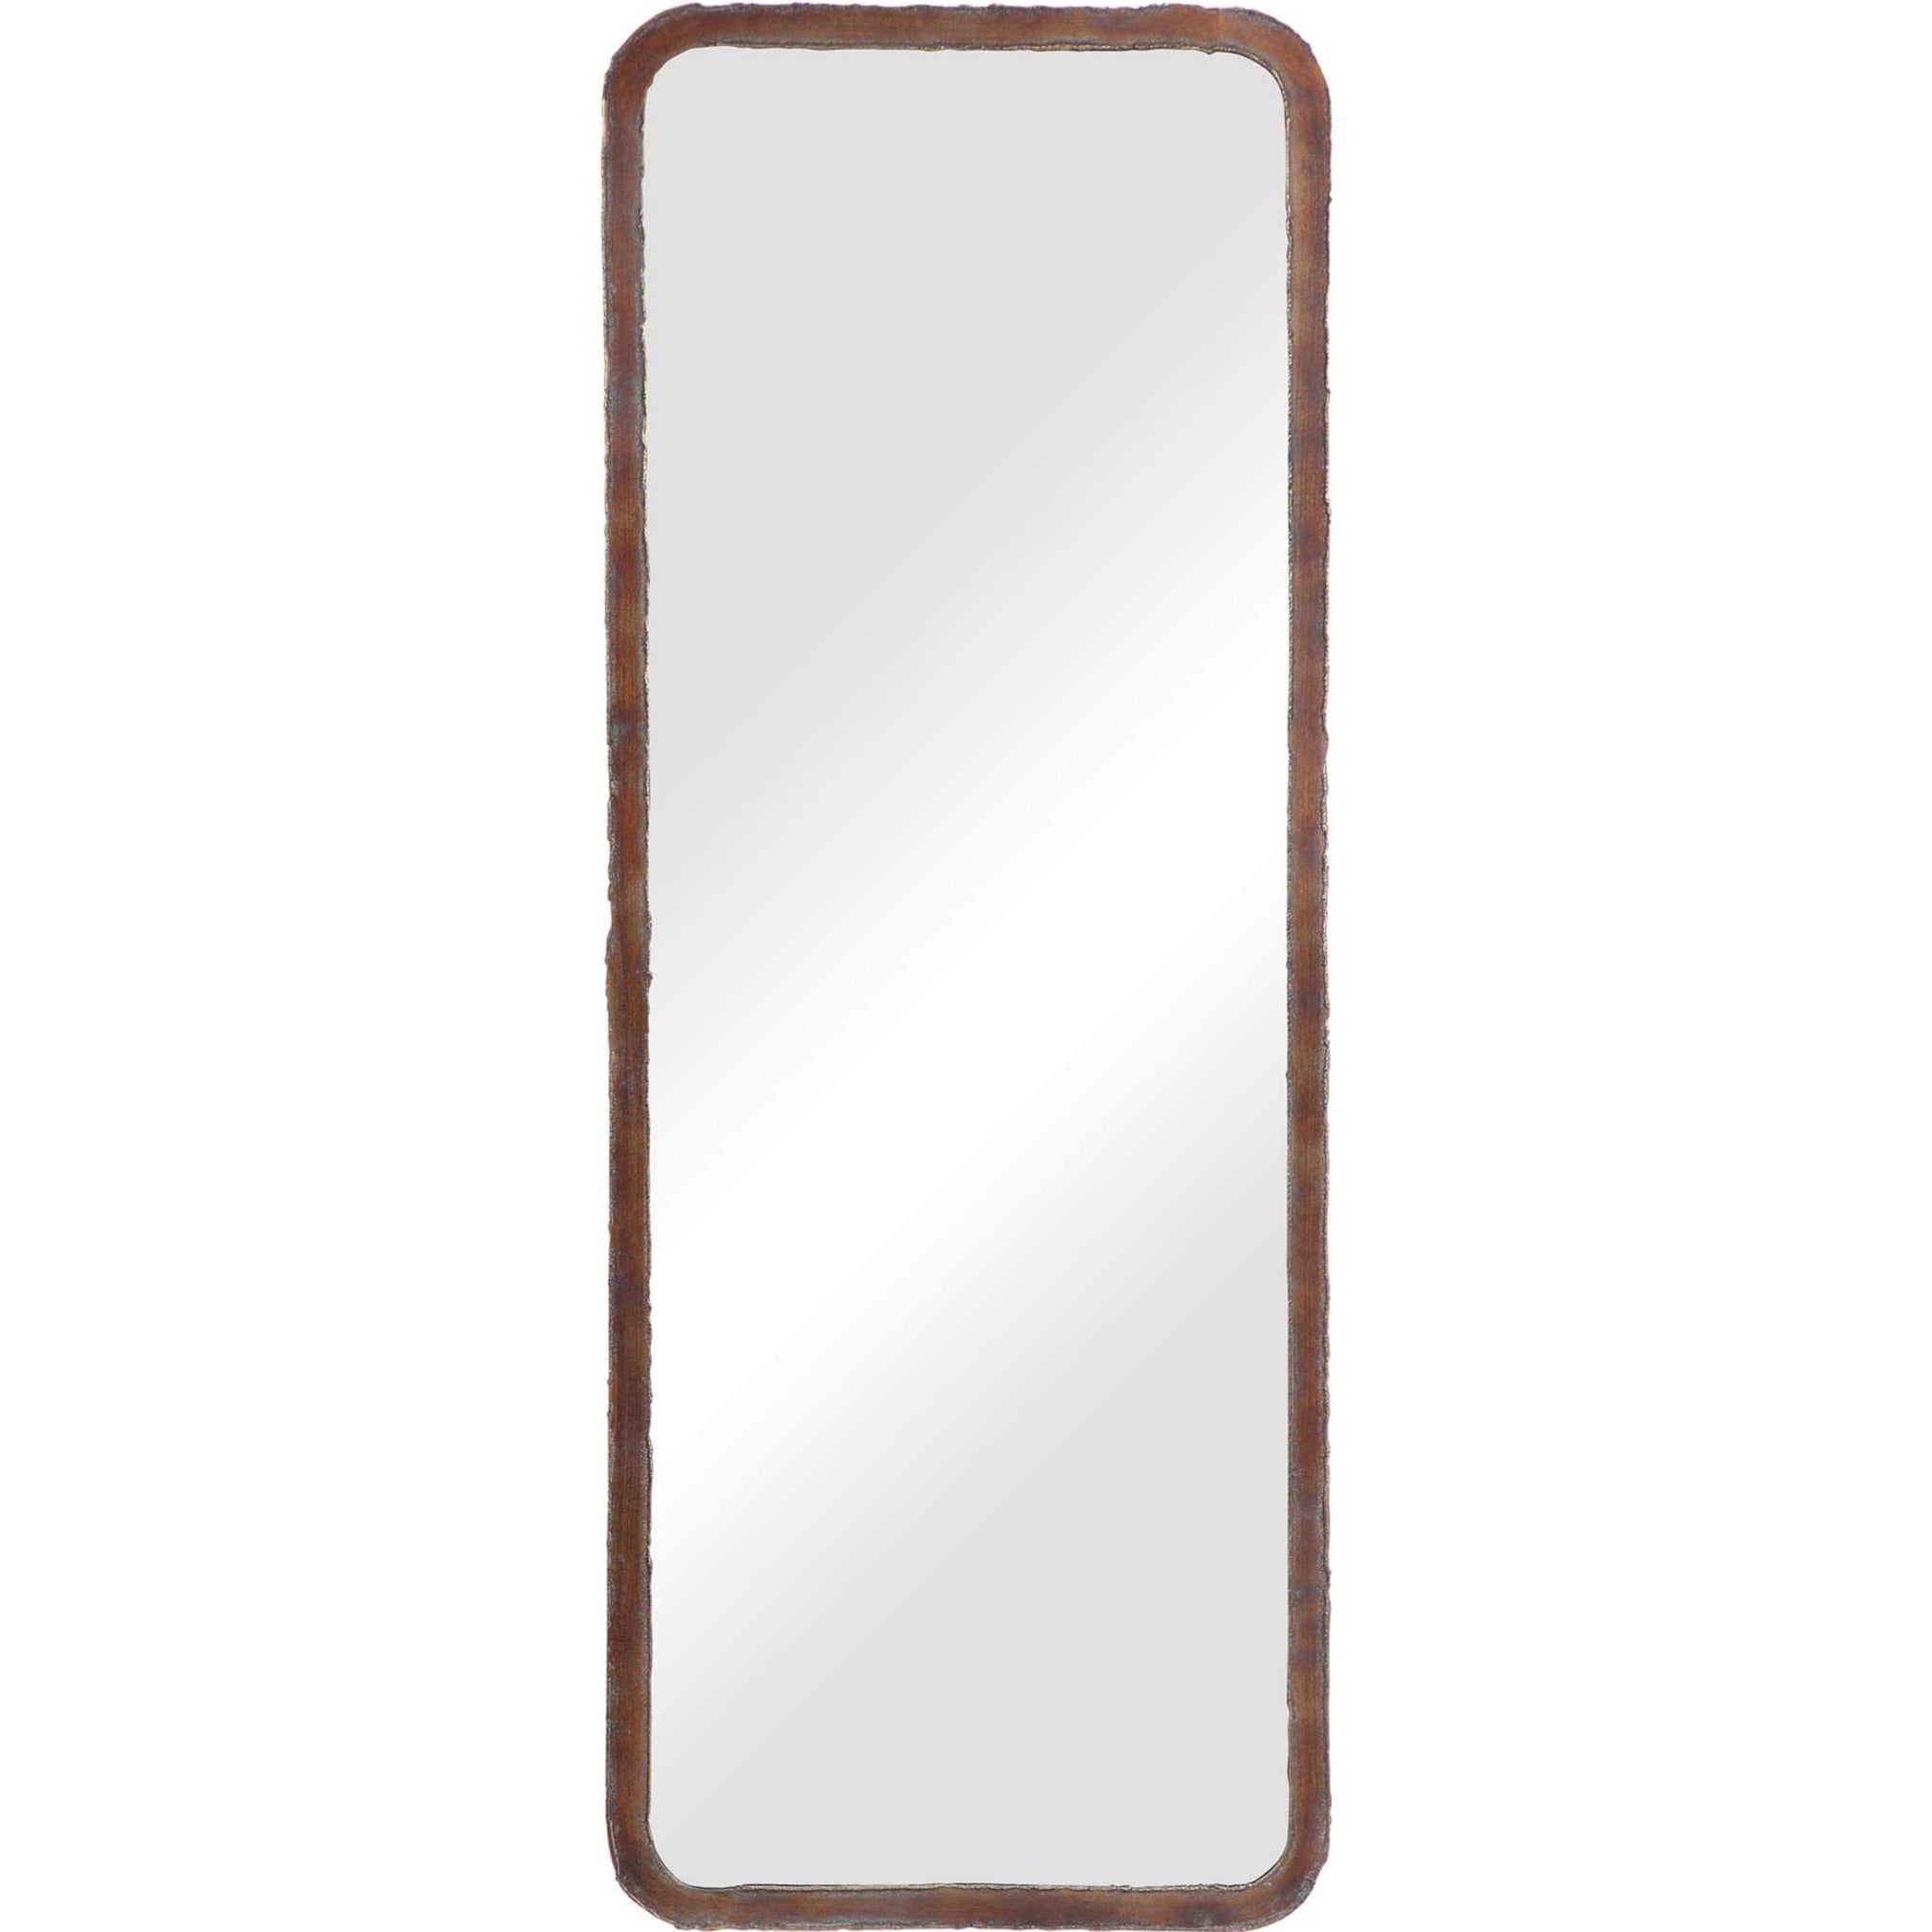 Polished Edge Aluminum Mirror/Silver Mirror/Copper Free and Lead Free Miror  - China Copper Free Mirror, Polished Edge Mirror